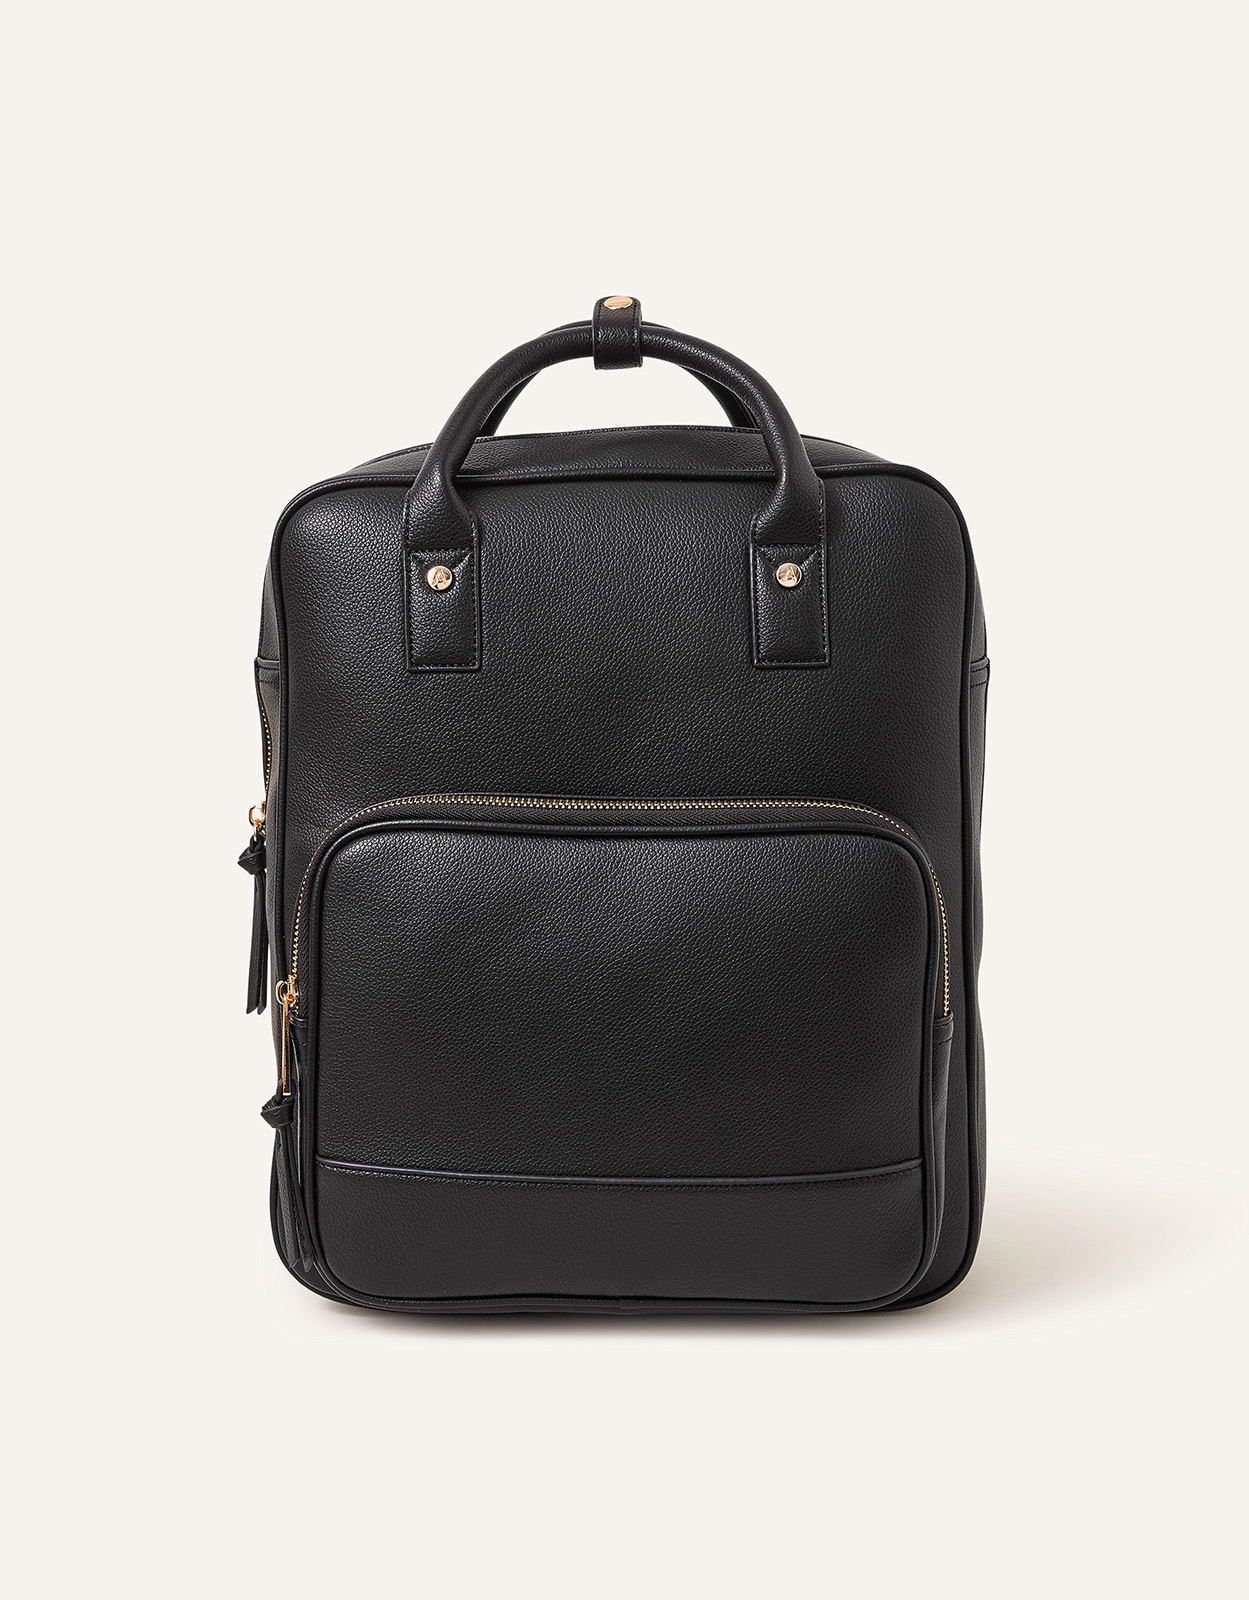 Accessorize Black Pocket Top Handle Backpack, Size: 29x35cm